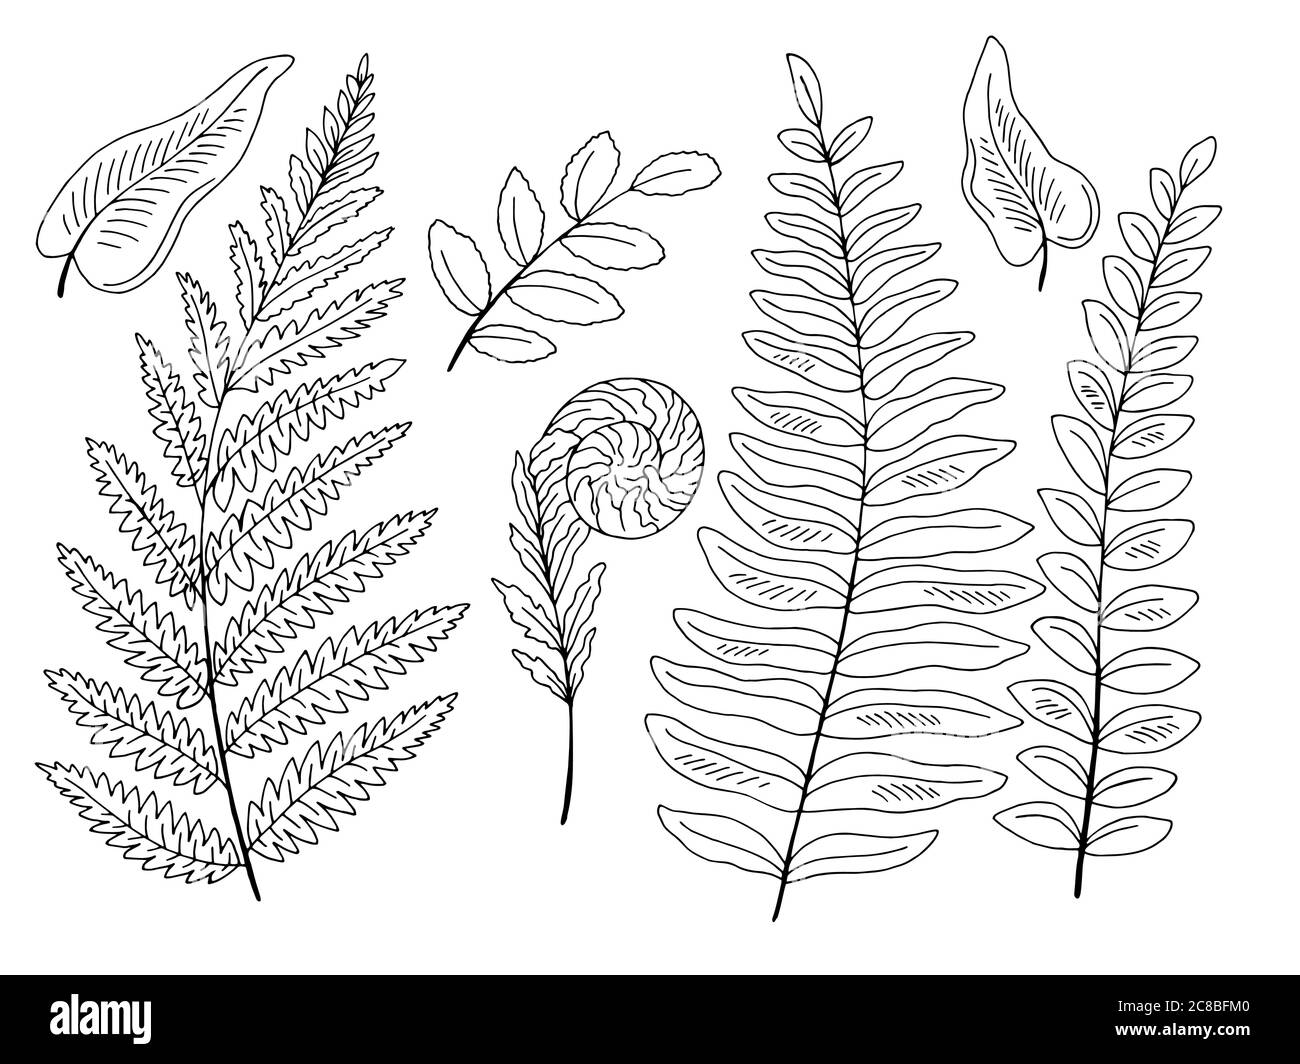 Farn Pflanze Grafik schwarz weiß isoliert Satz Illustration Vektor Stock Vektor